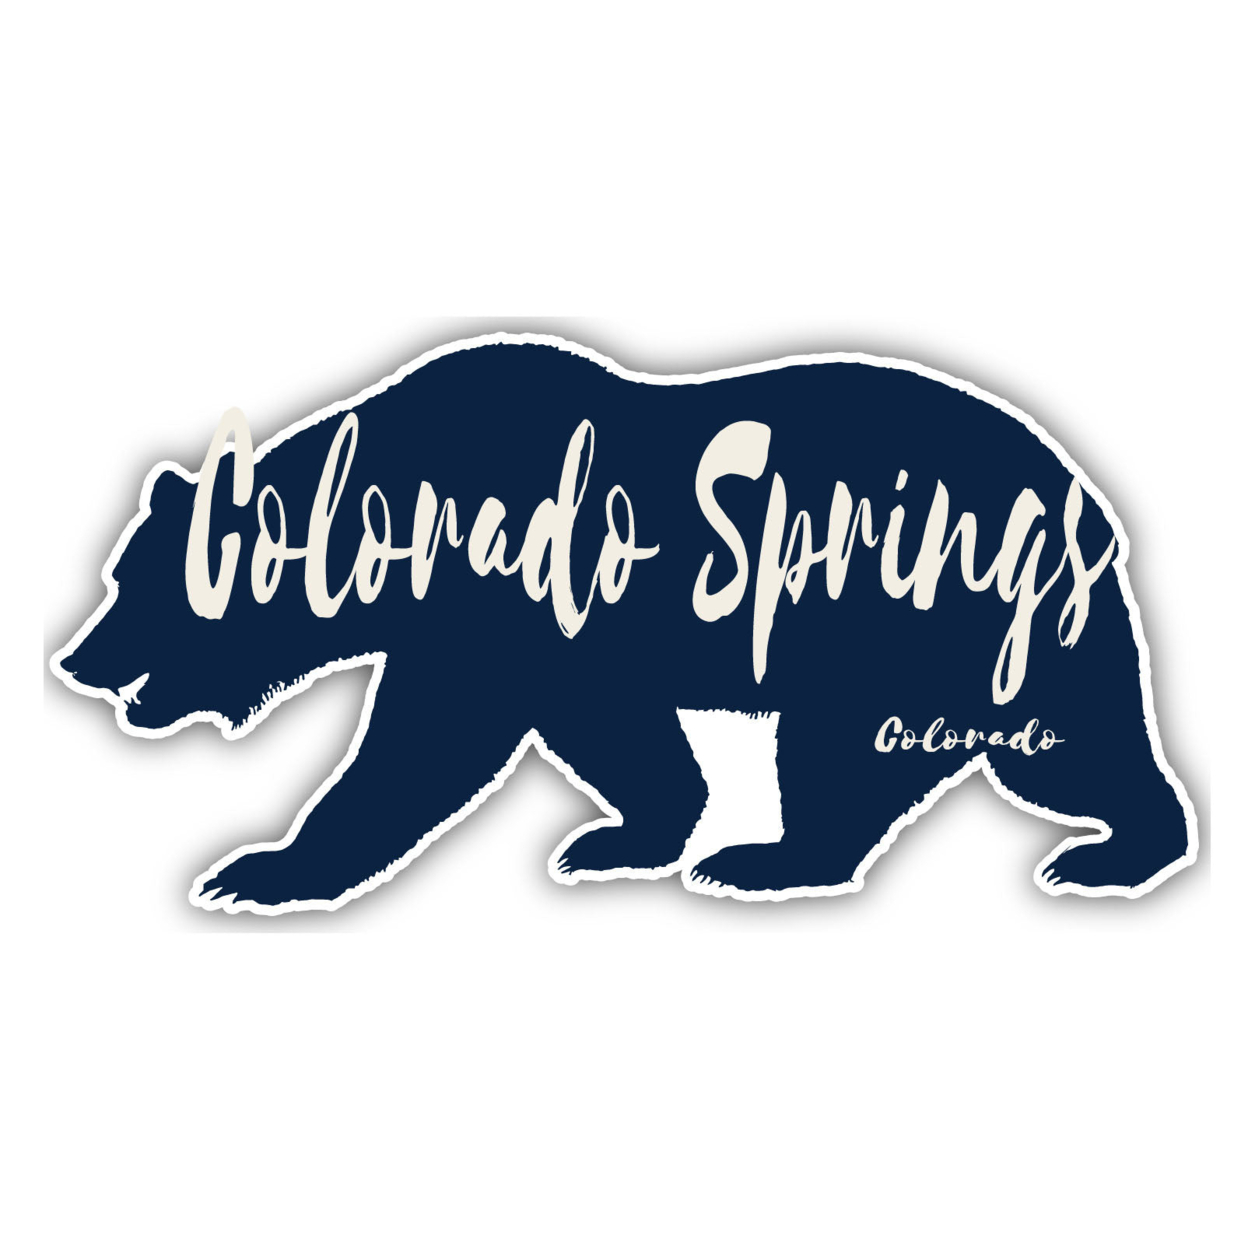 Colorado Springs Colorado Souvenir Decorative Stickers (Choose Theme And Size) - 4-Pack, 8-Inch, Adventures Awaits